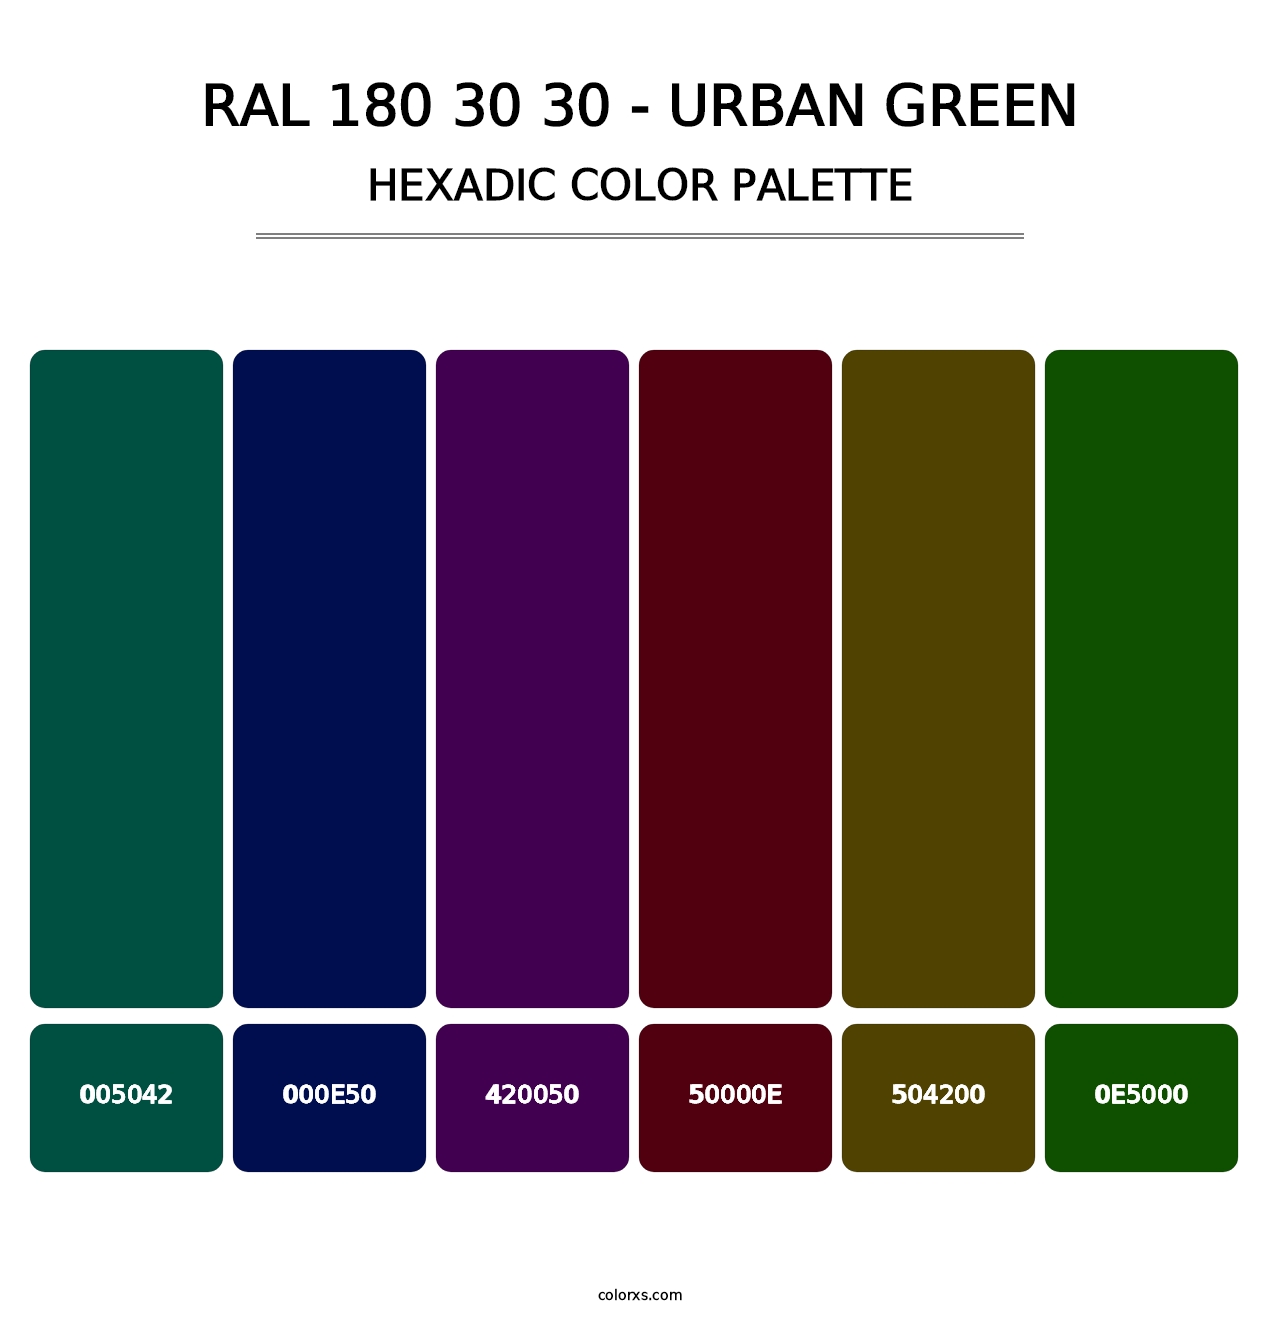 RAL 180 30 30 - Urban Green - Hexadic Color Palette